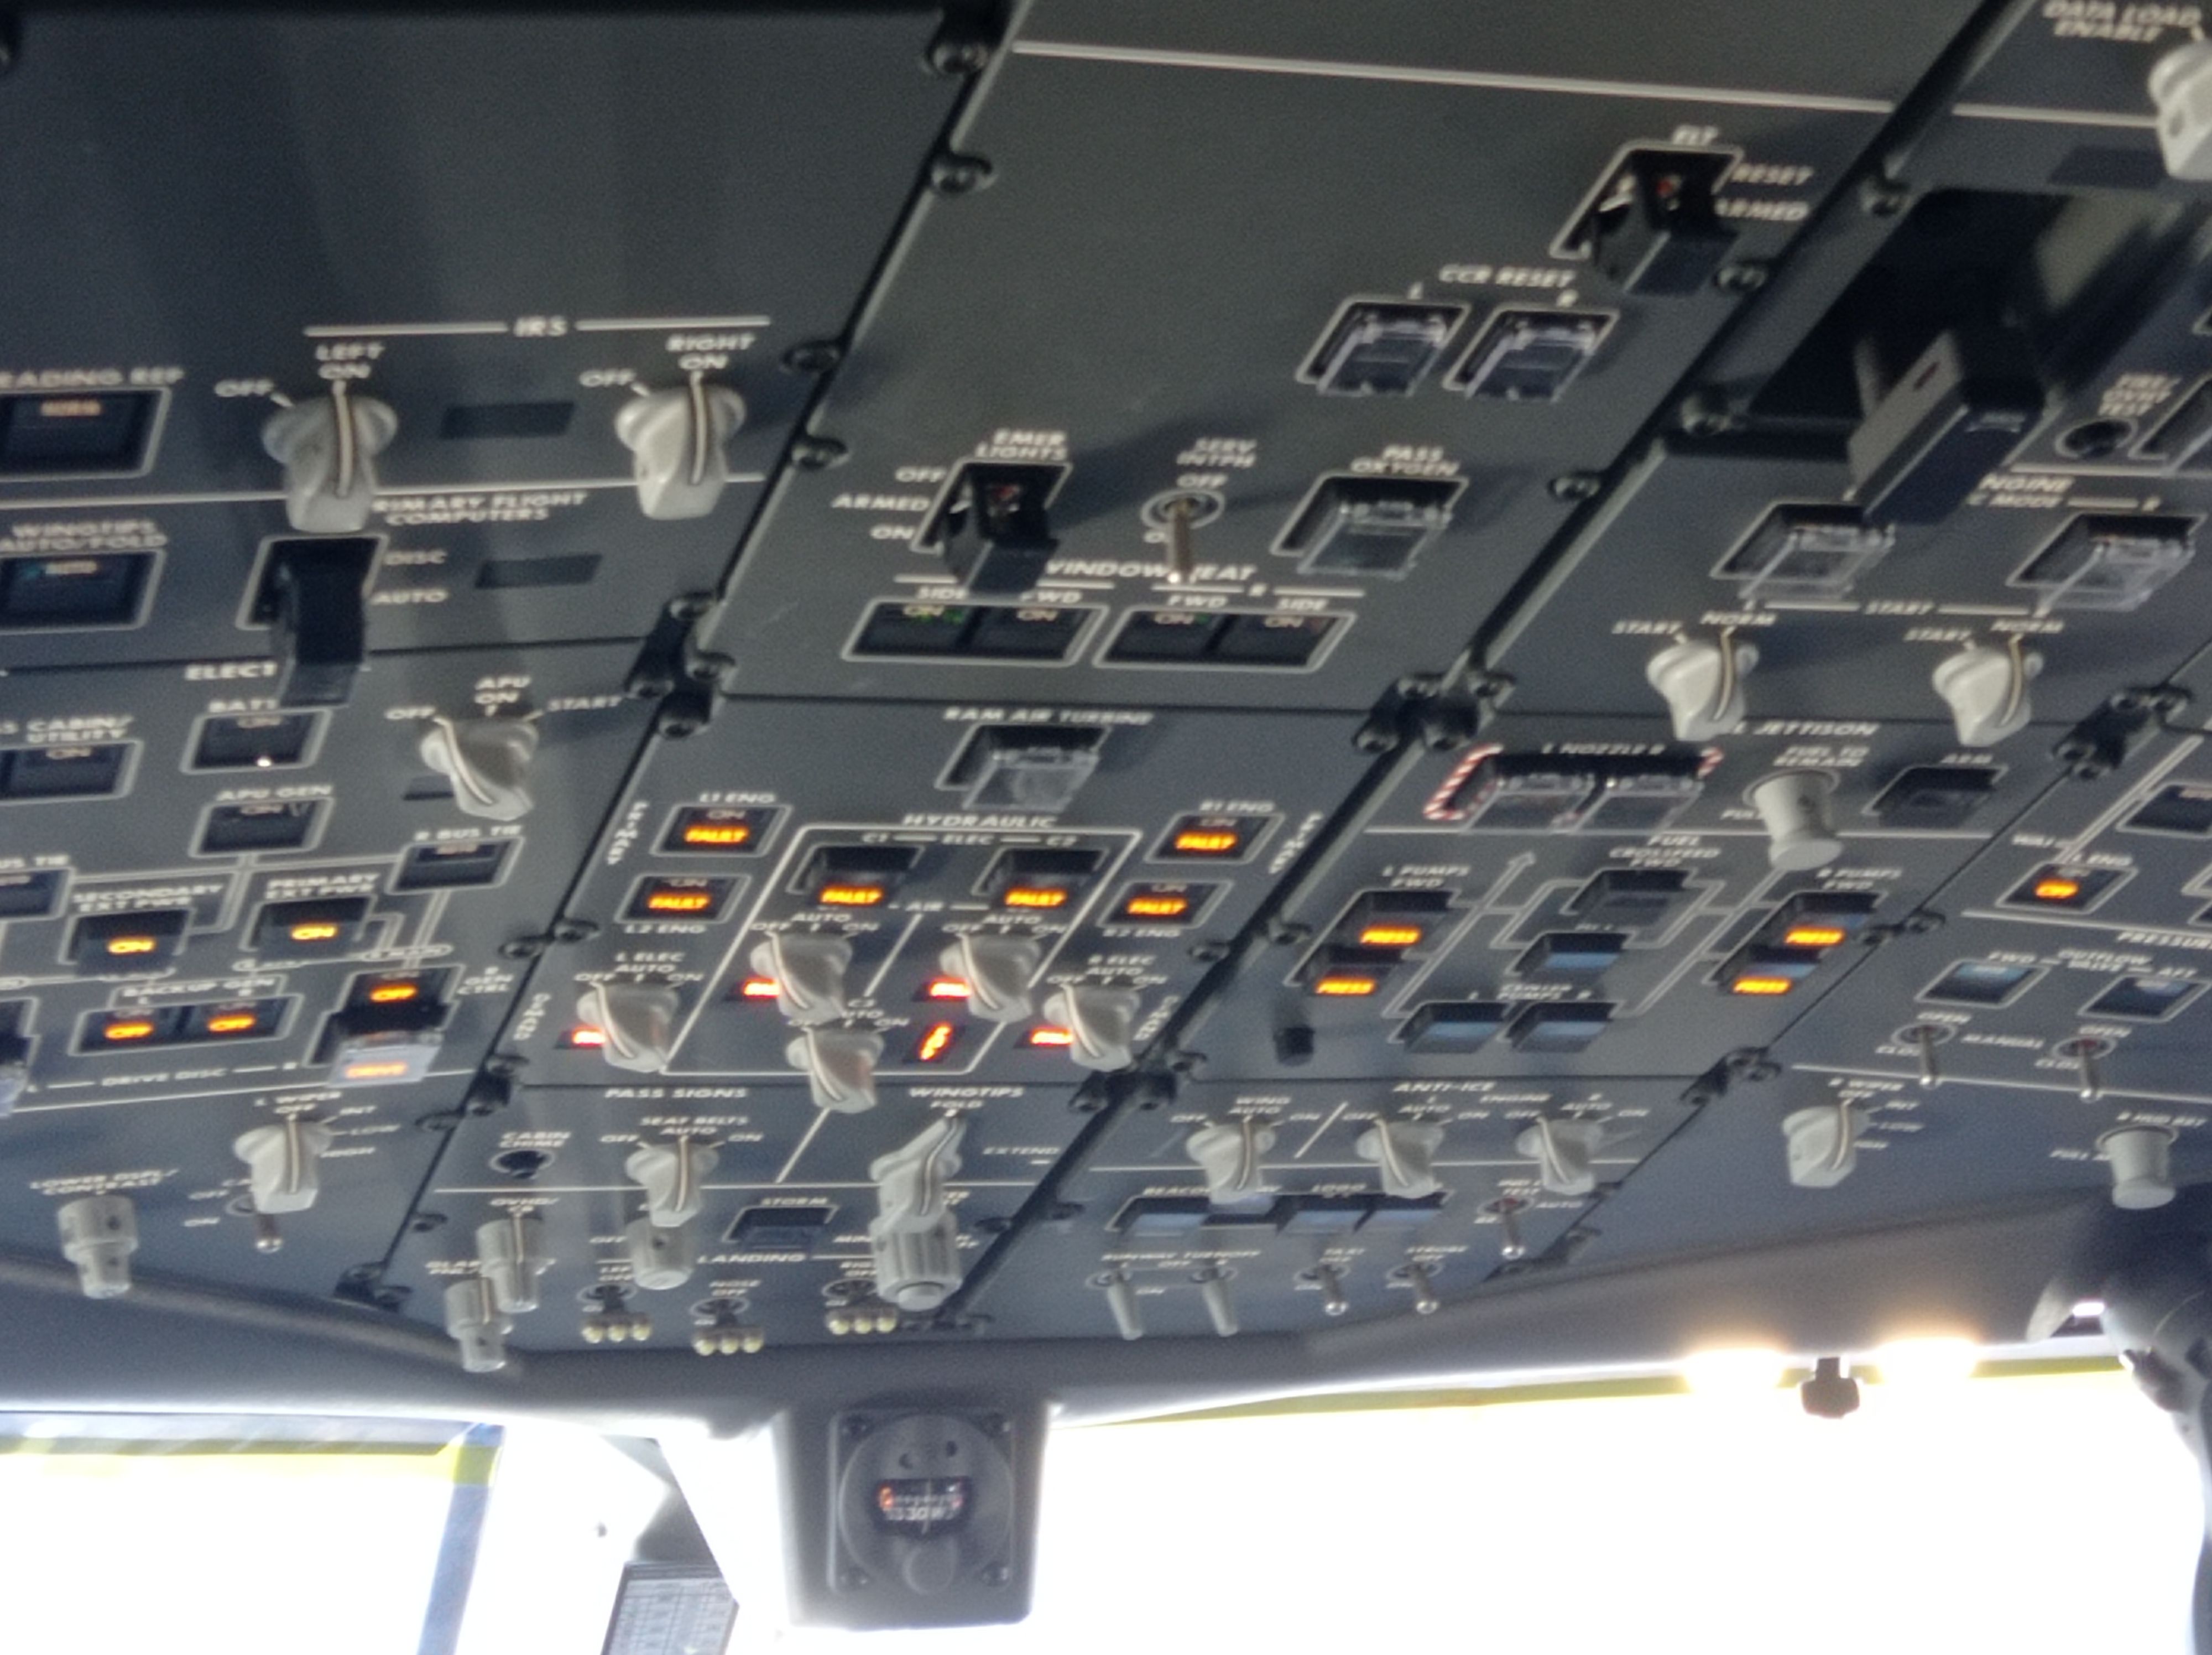 777x cockpit